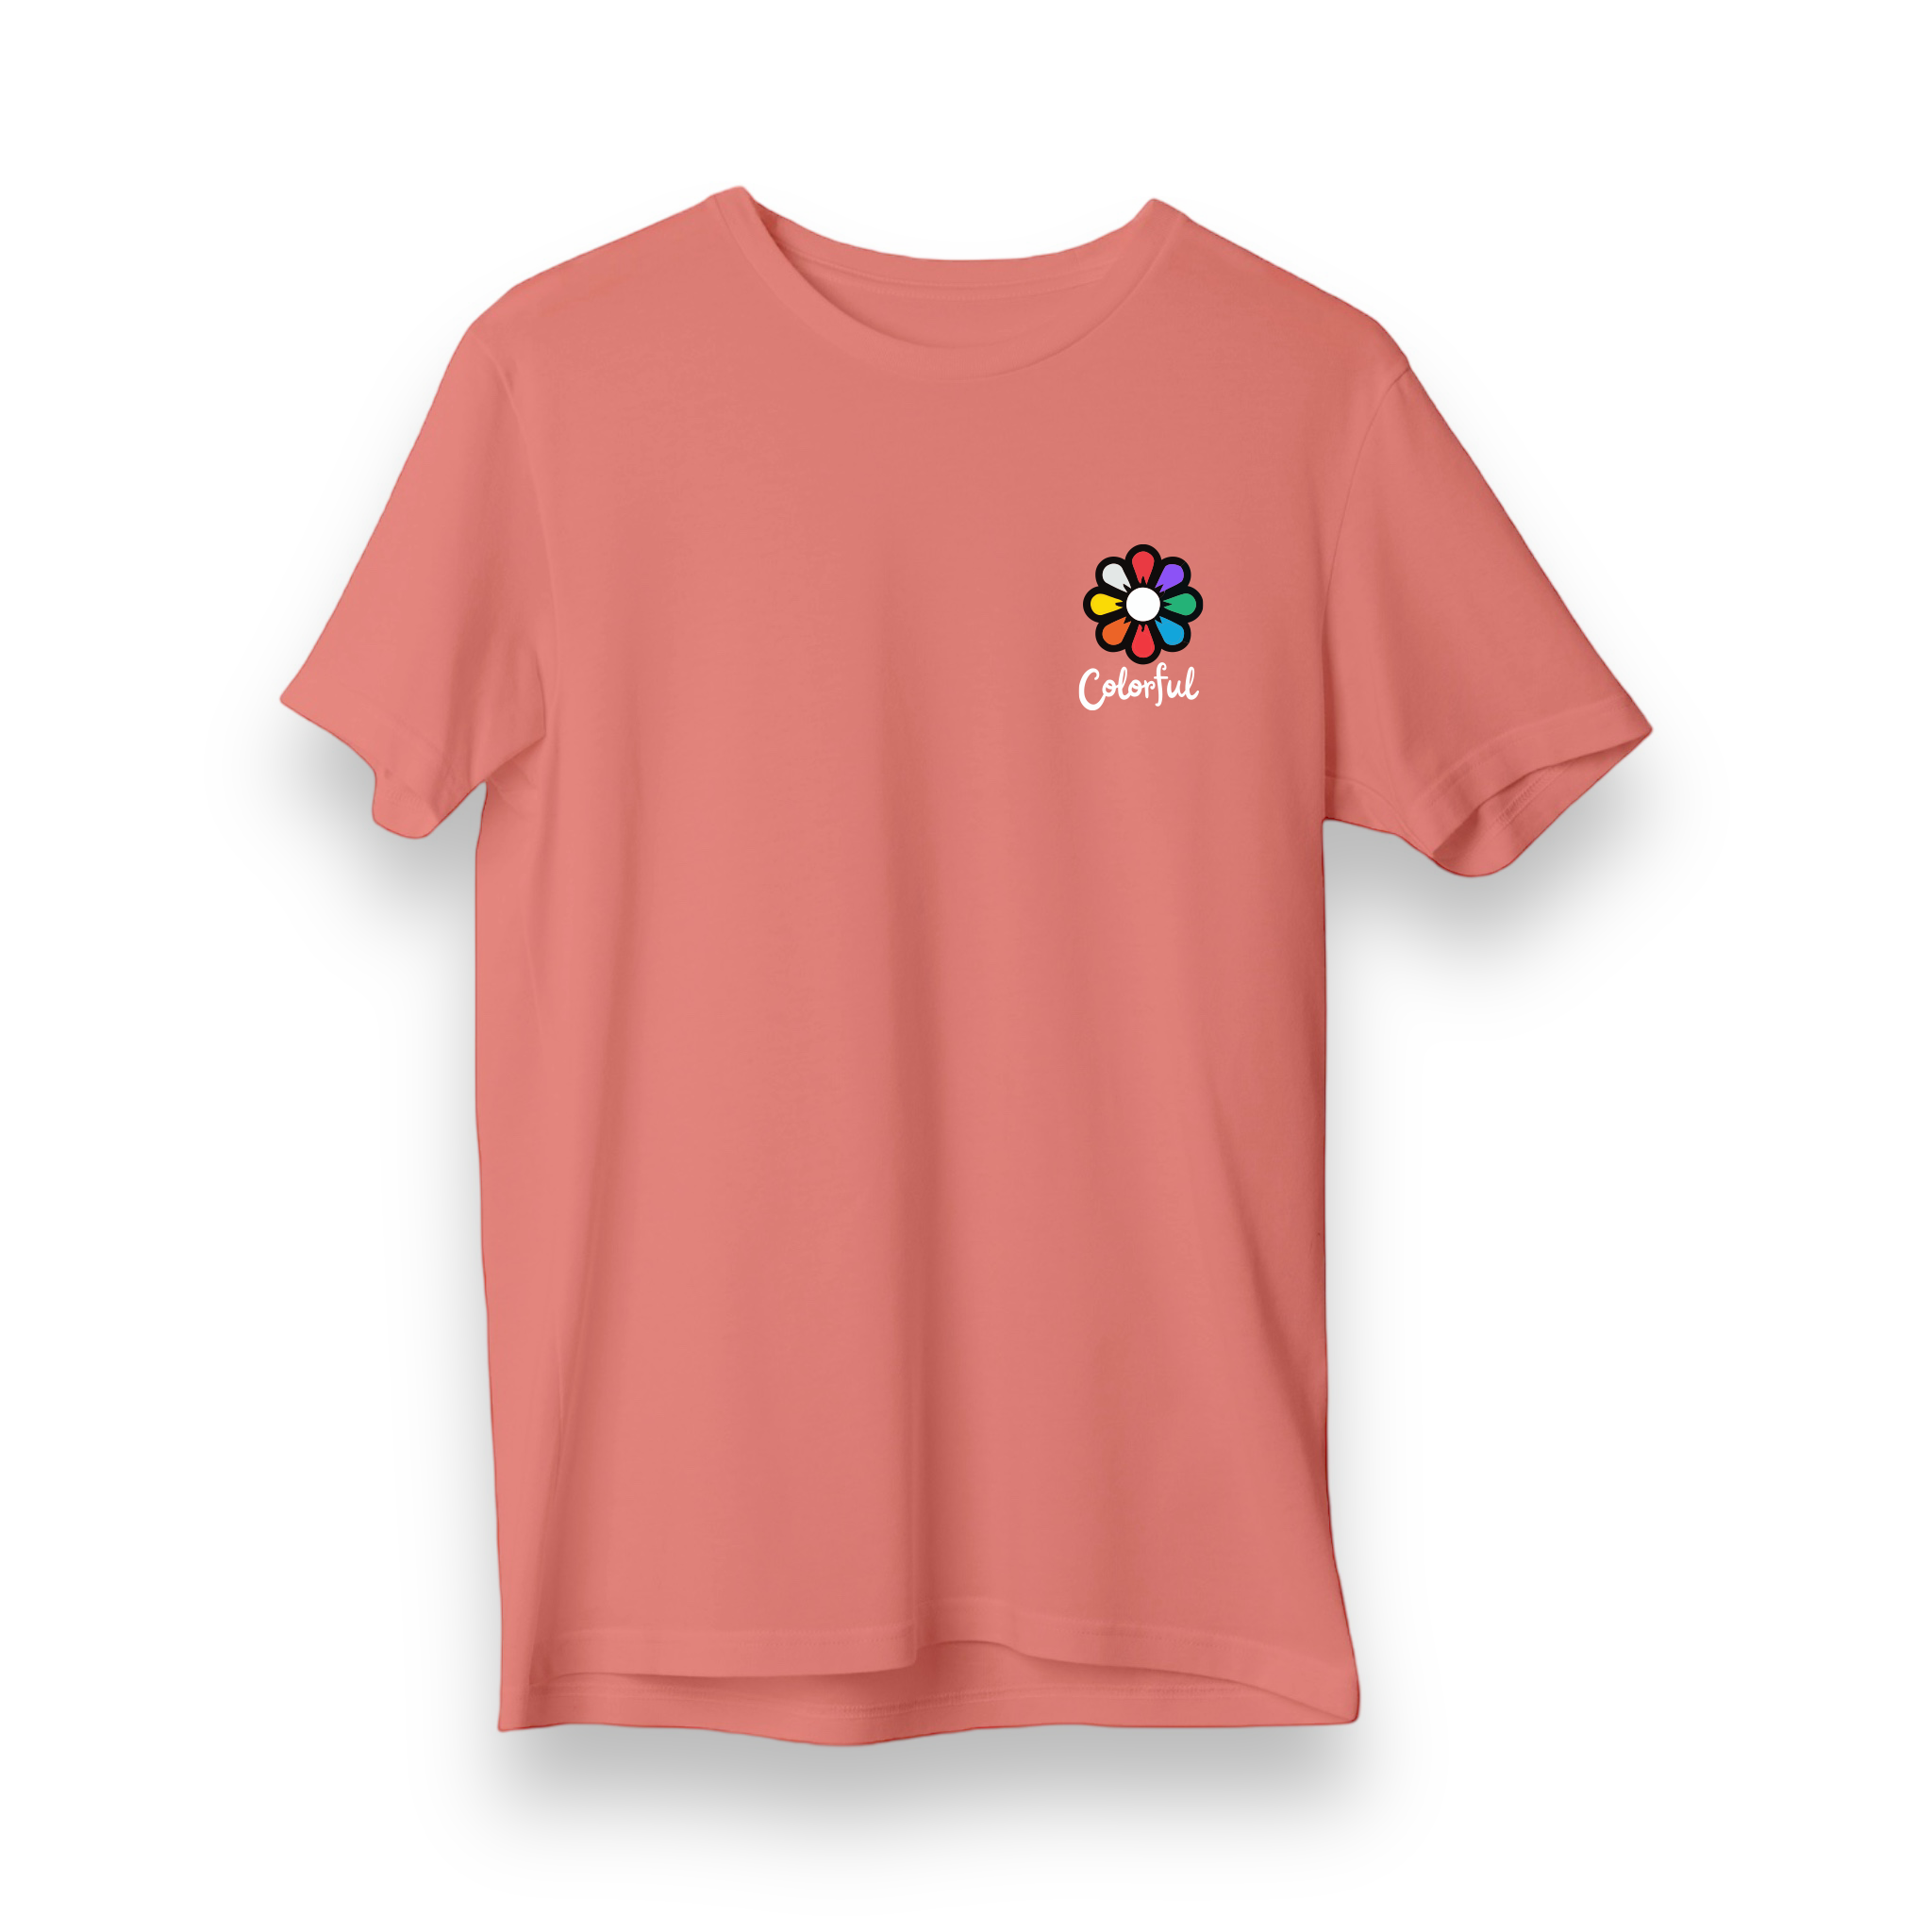 Colorful - Regular T-Shirt